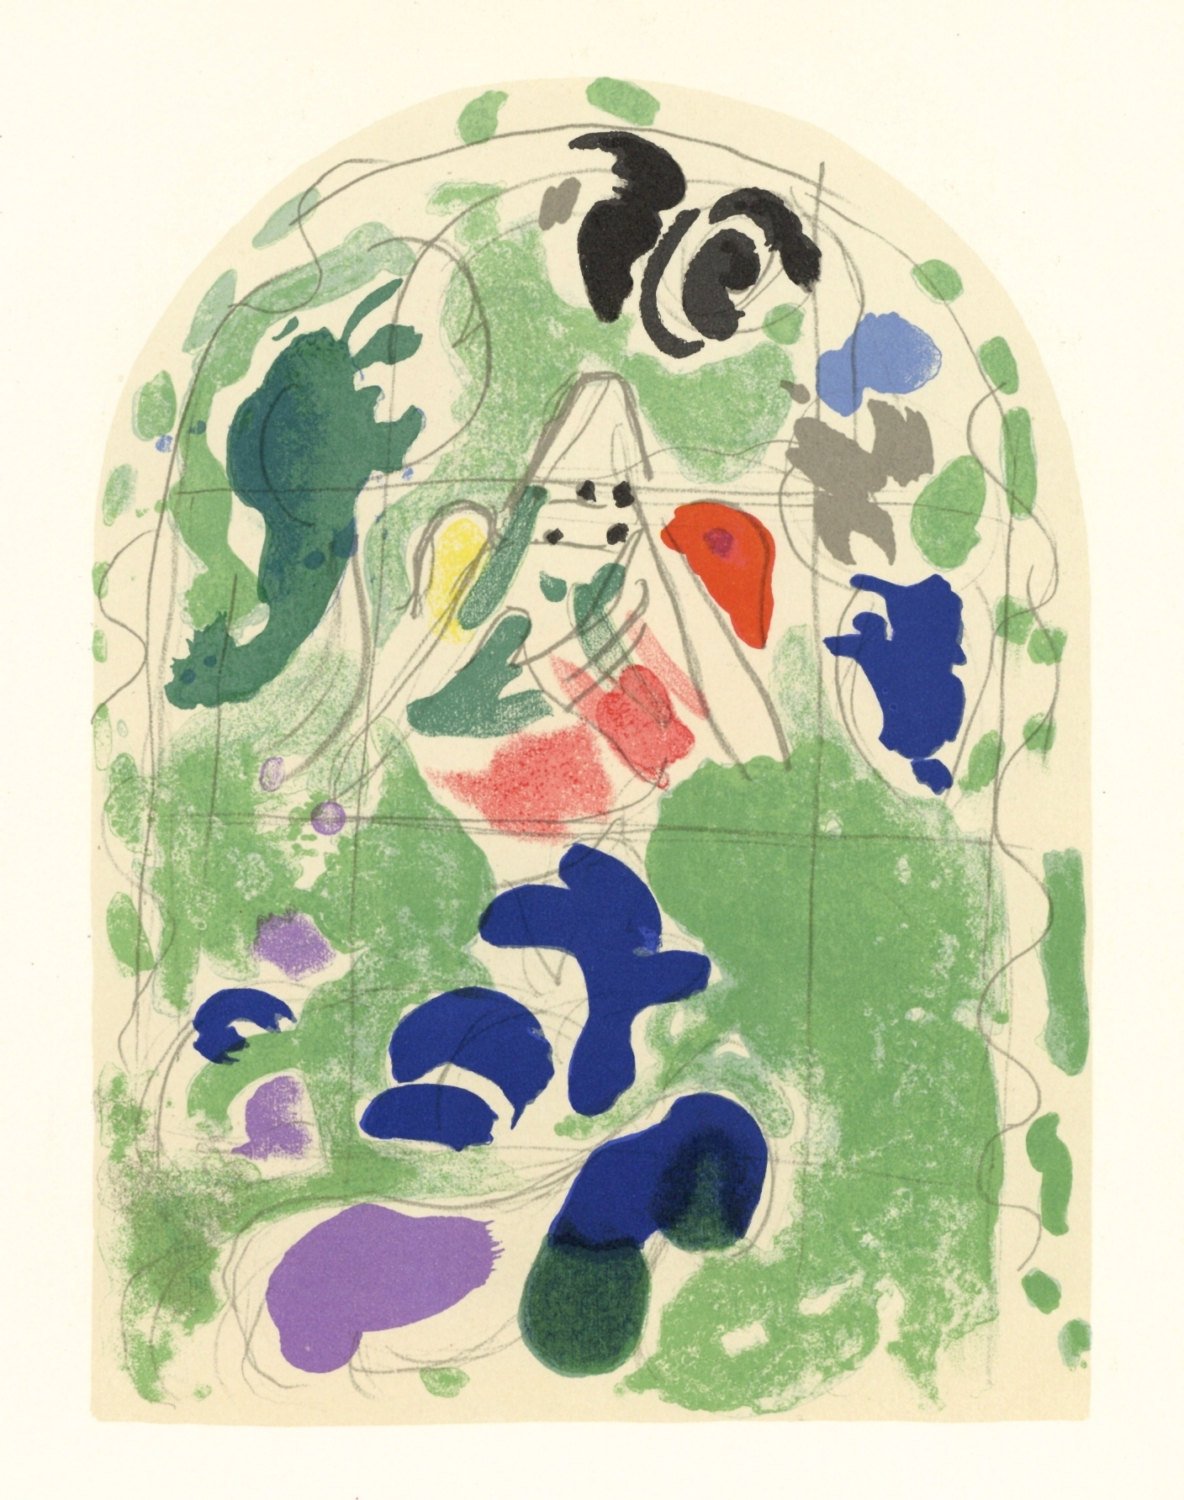 Chagall Lithograph "Sketch of Issachar" Jerusalem windows 1962